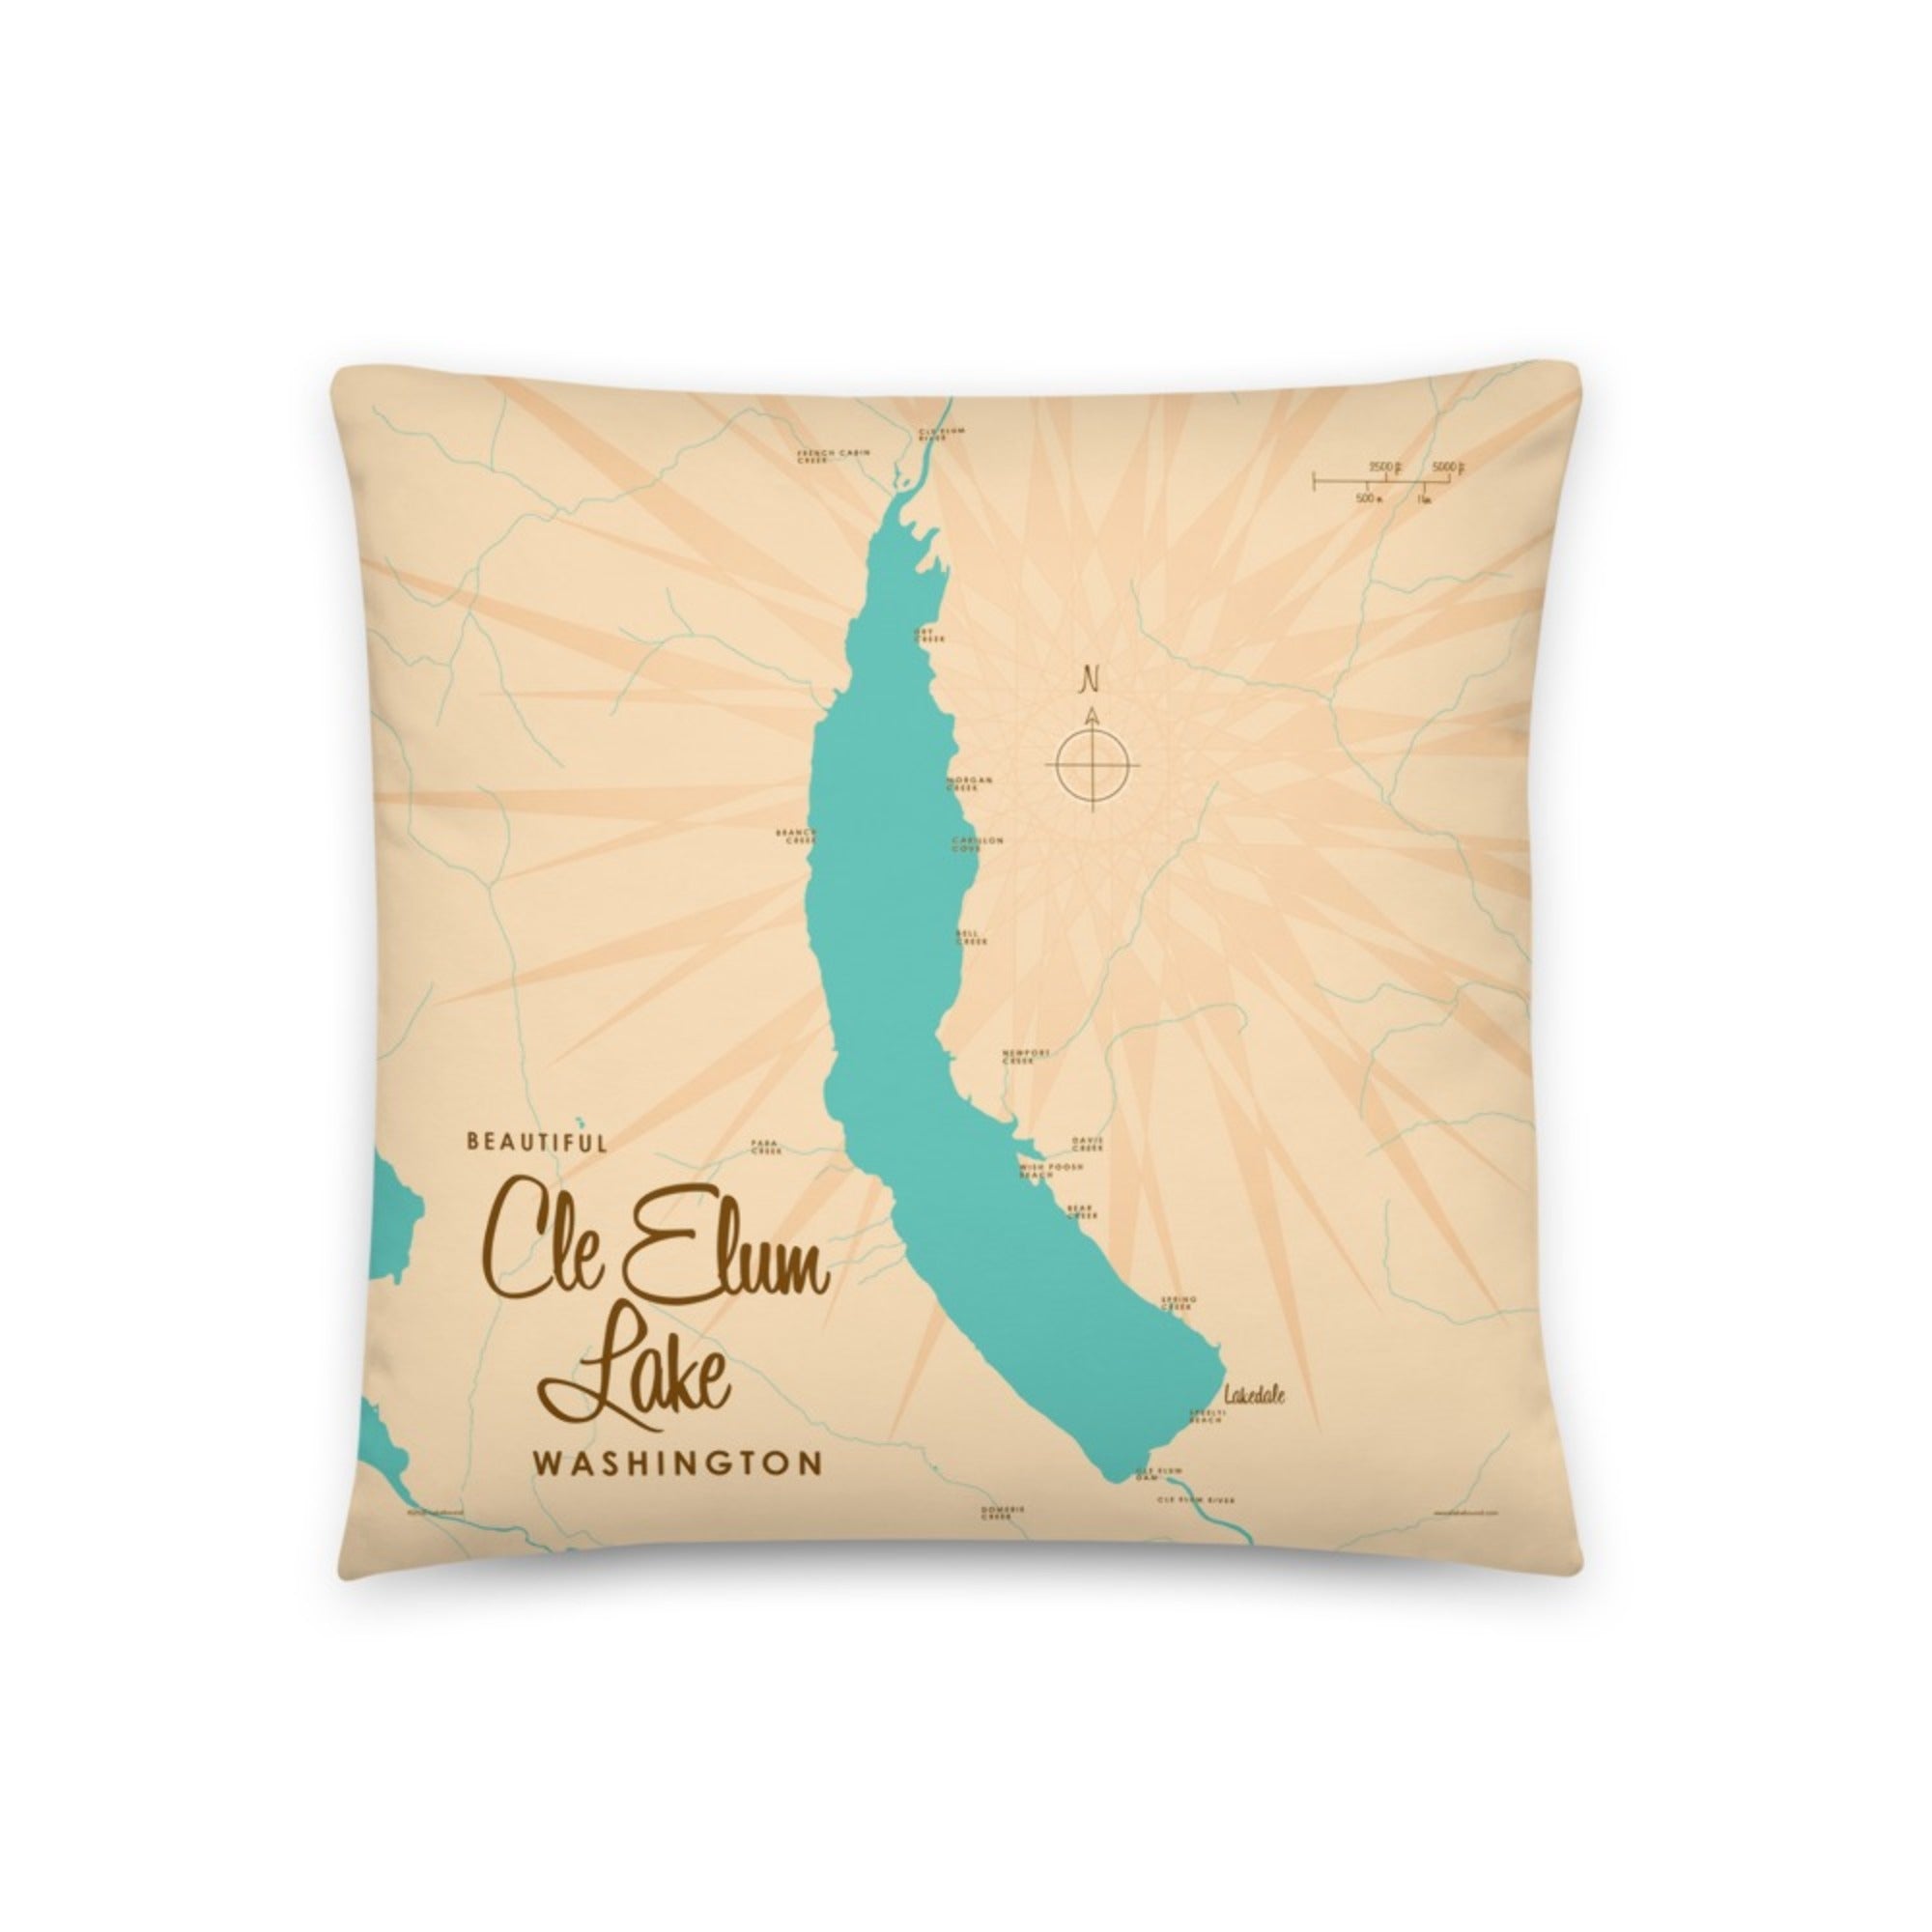 Cle Elum Lake Washington Pillow